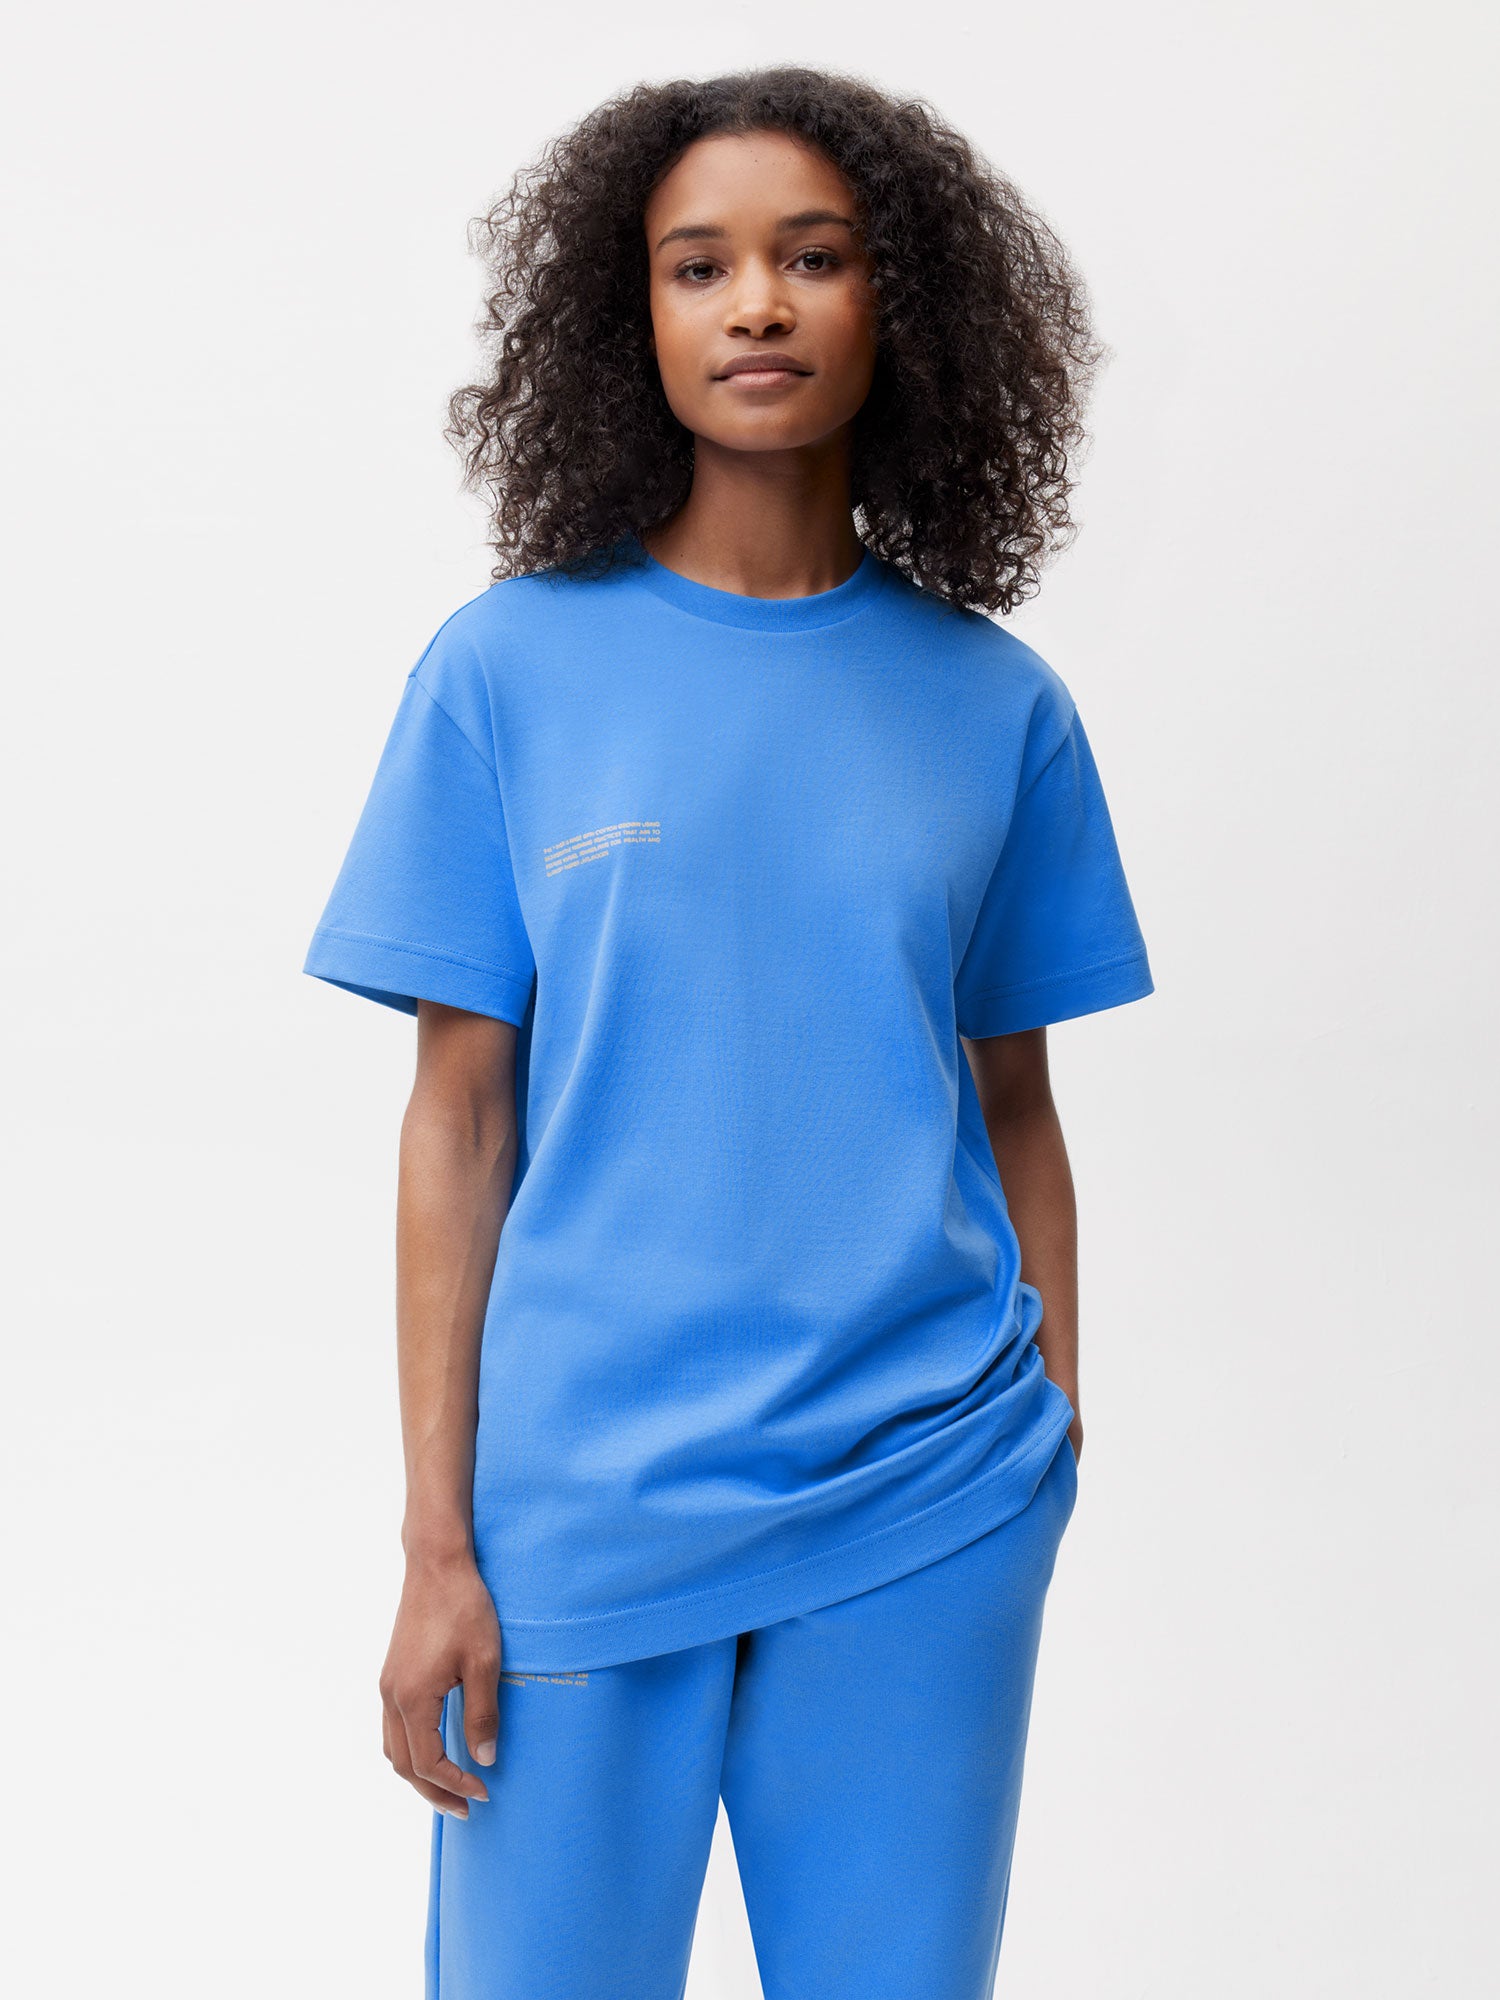 Afro Fashion Oversized T-Shirt for Women M / Black / 100% Cotton